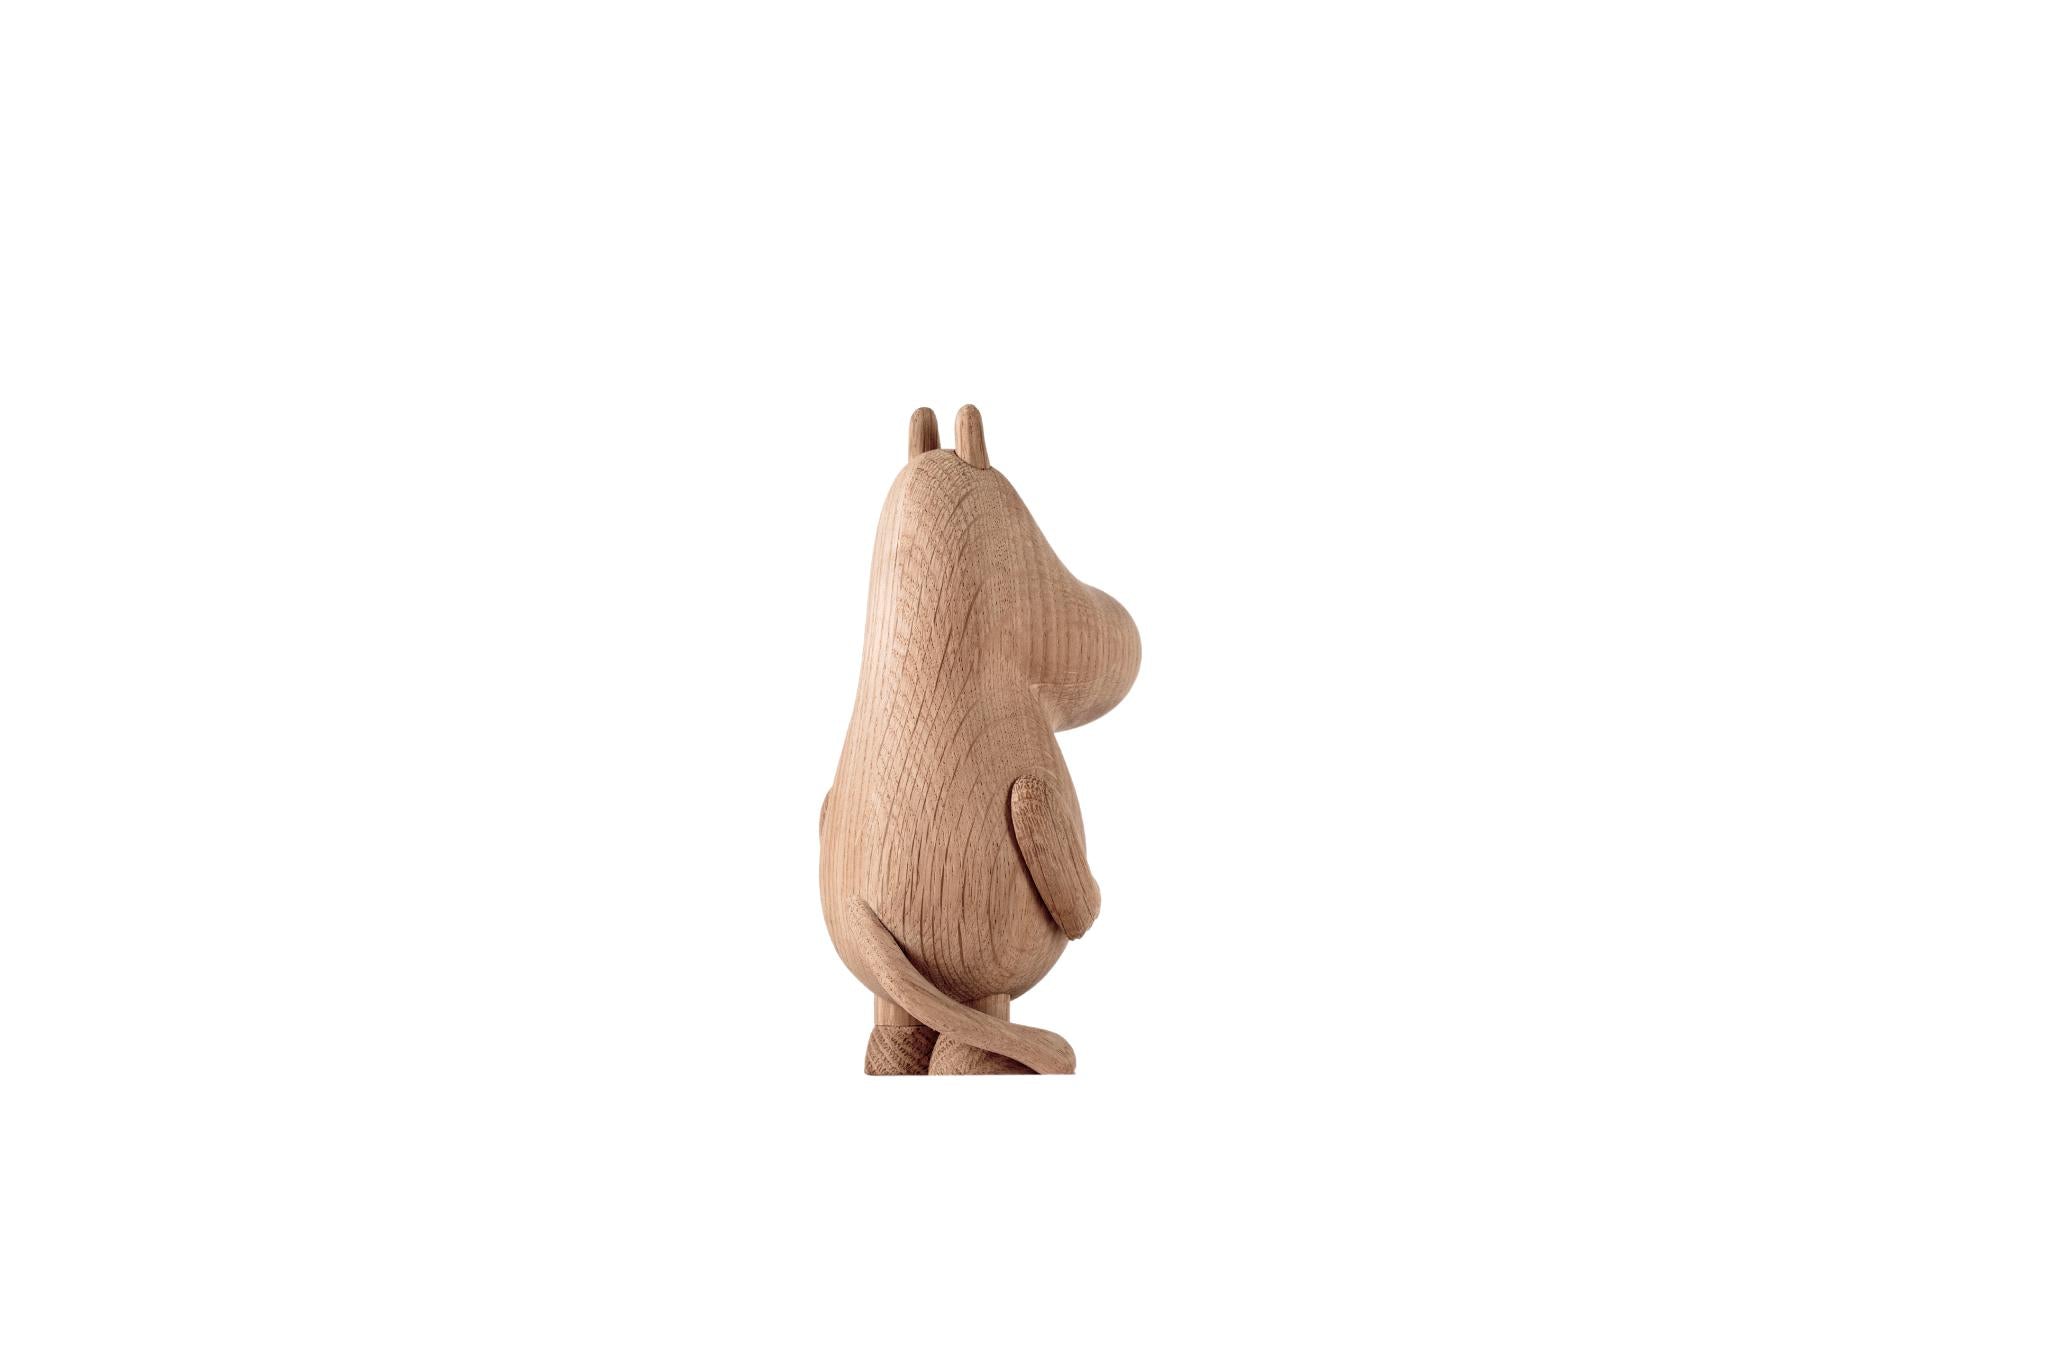 Boyhood Moomintroll Holzfigur Eiche, klein